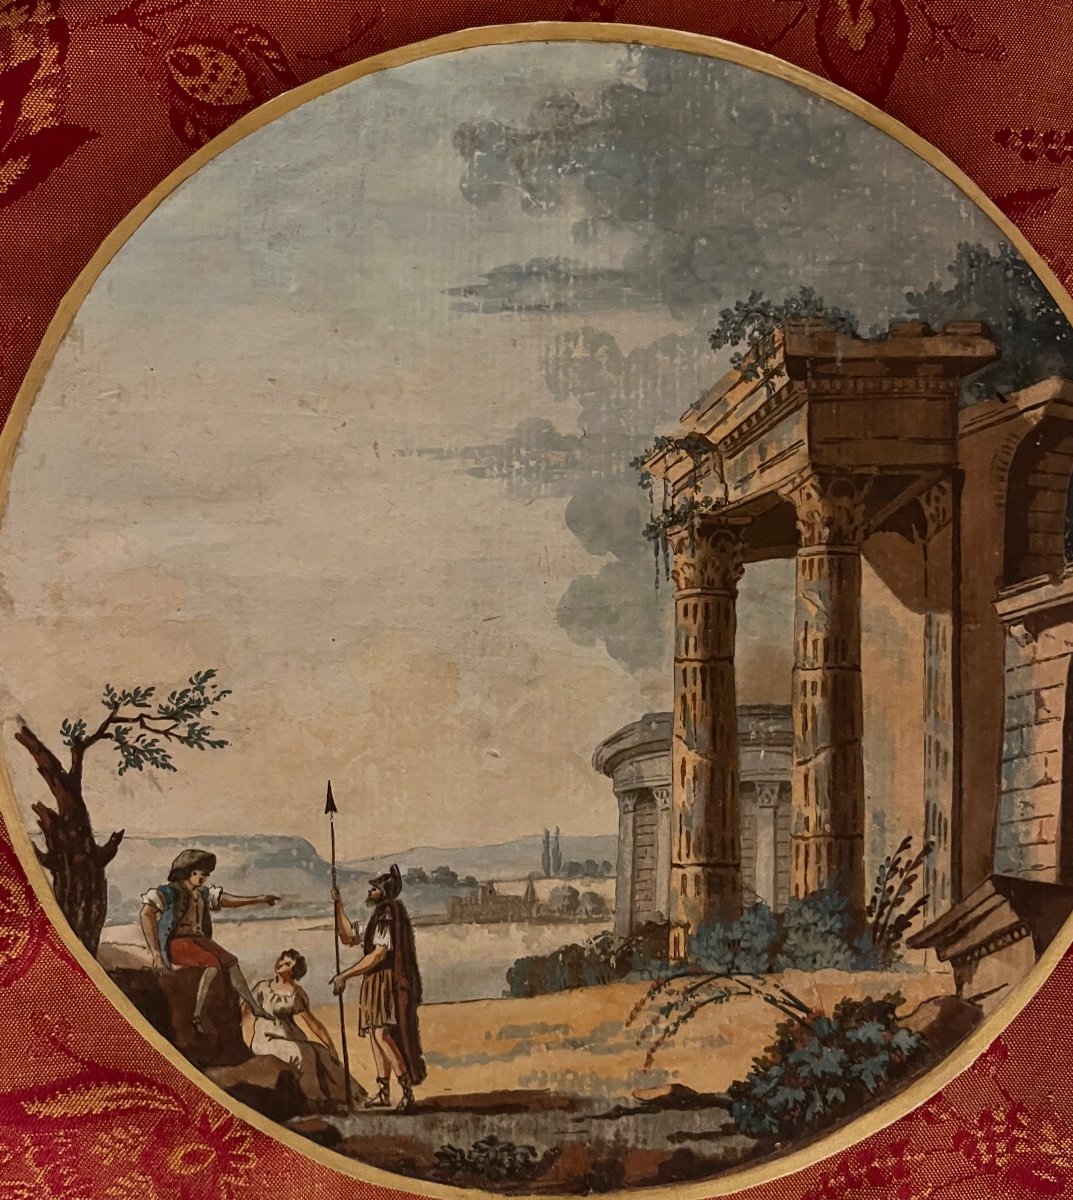 Rondo, Representing A Life Of Imaginary Ruins. 18th Century.